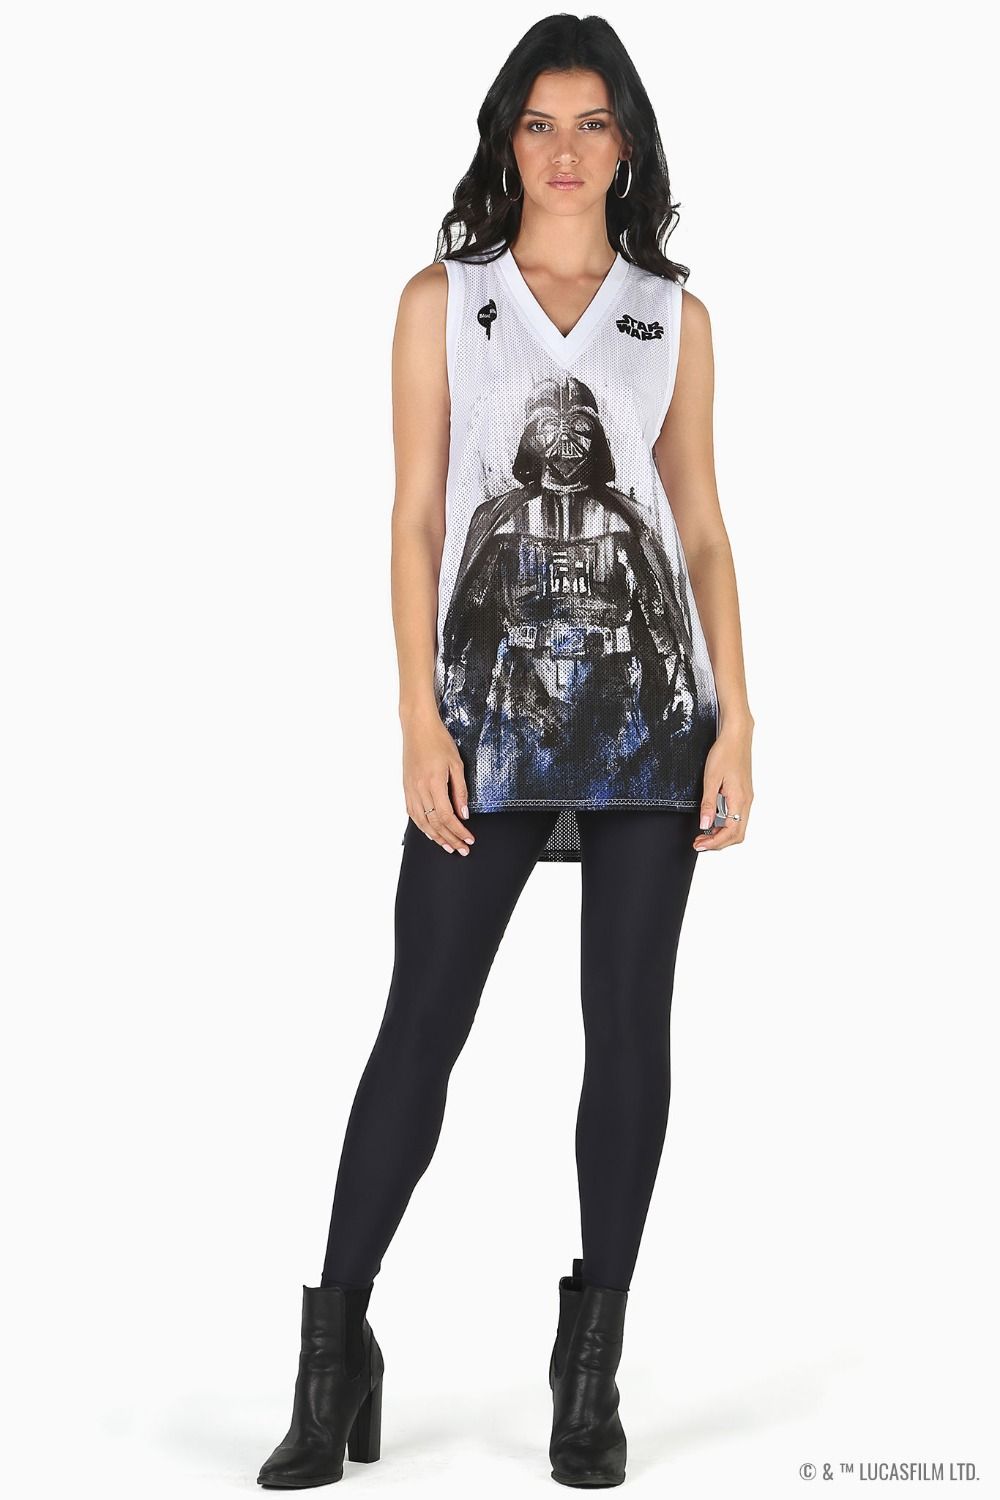 Black Milk Clothing x Star Wars Darth Vader Shooter Athletic Tank Top